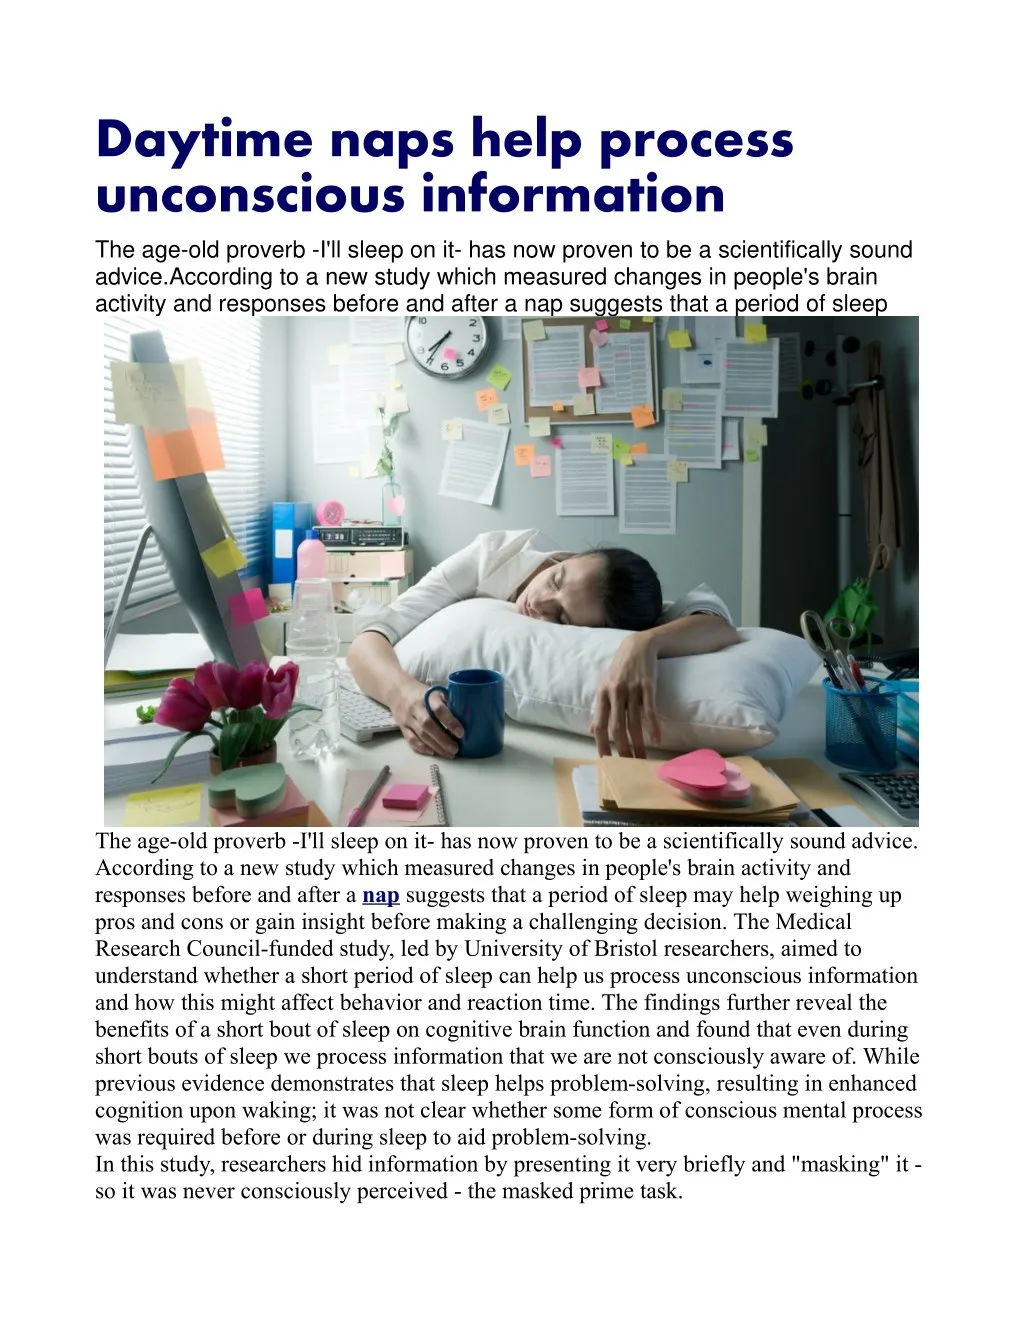 daytime naps help process unconscious information